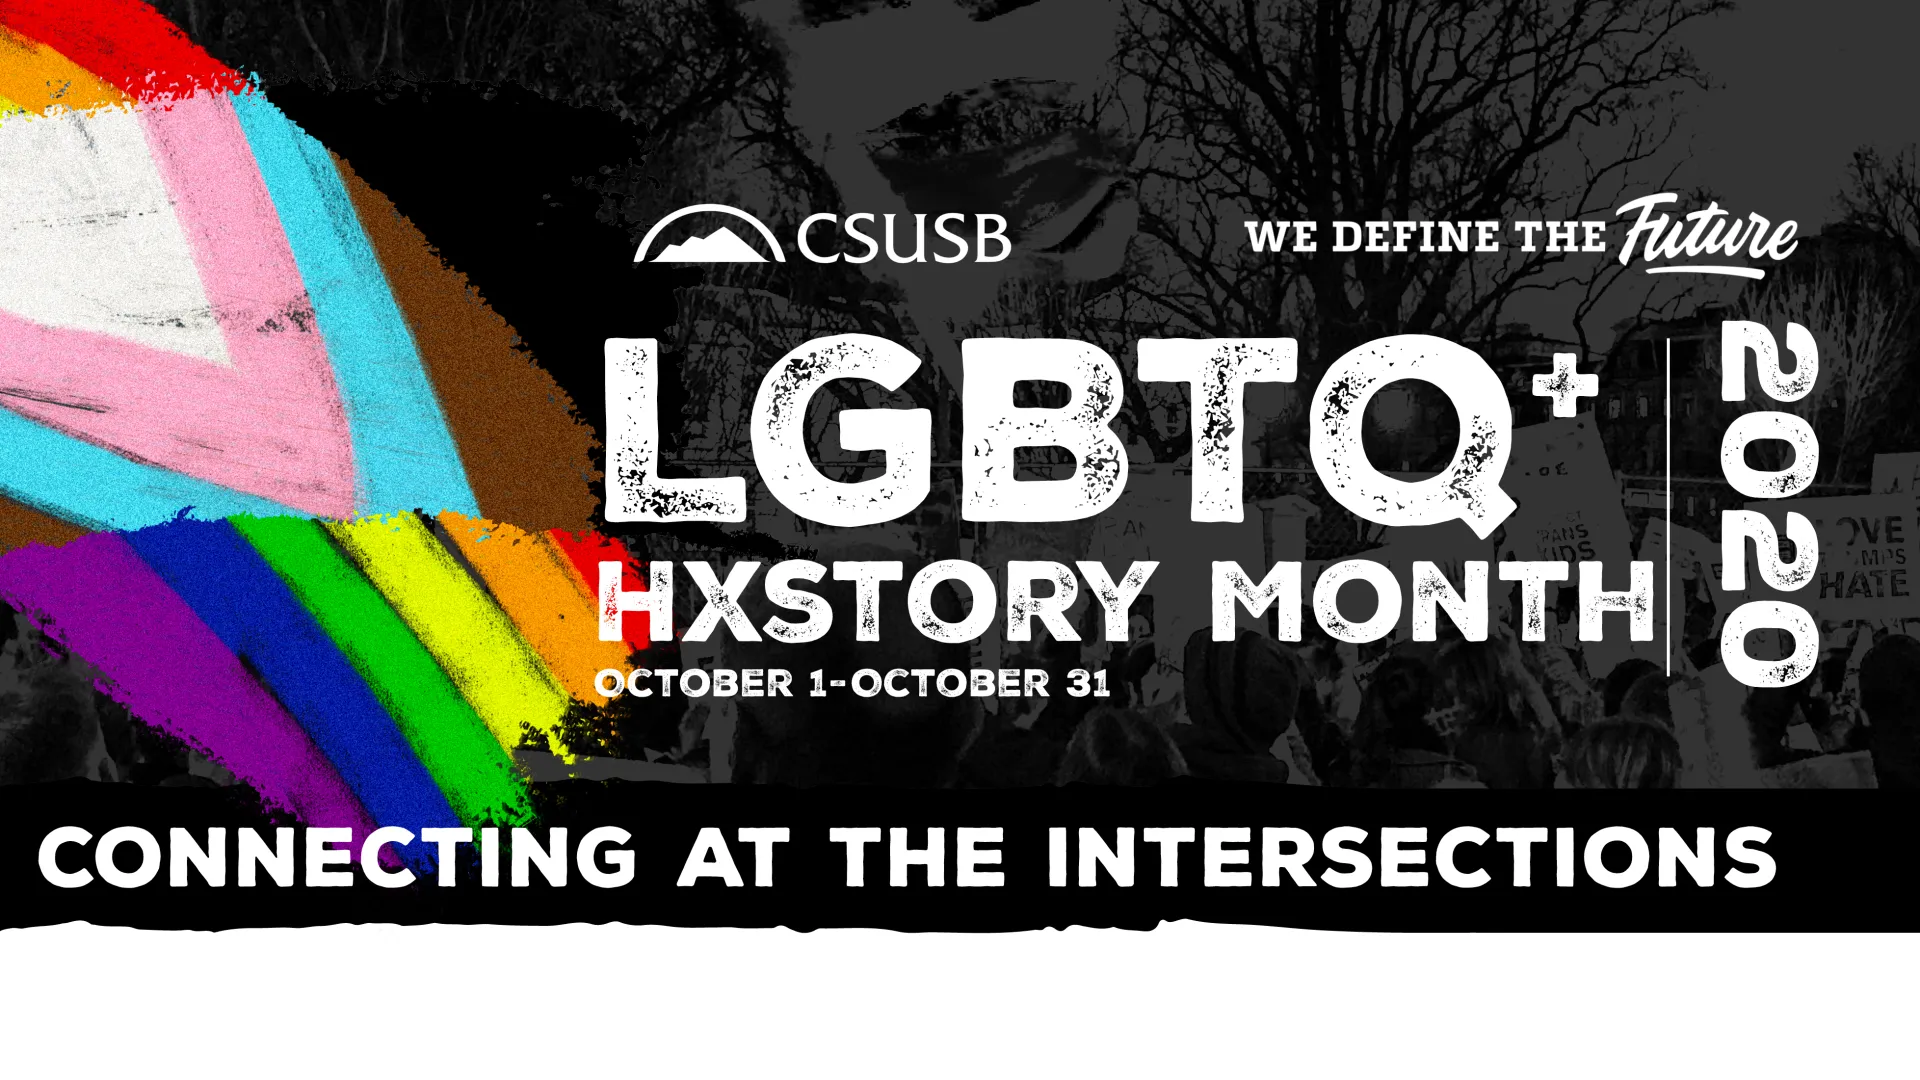 CSUSB celebrates LGBTQ+ Hxstory Month will be organized between Oct1-30